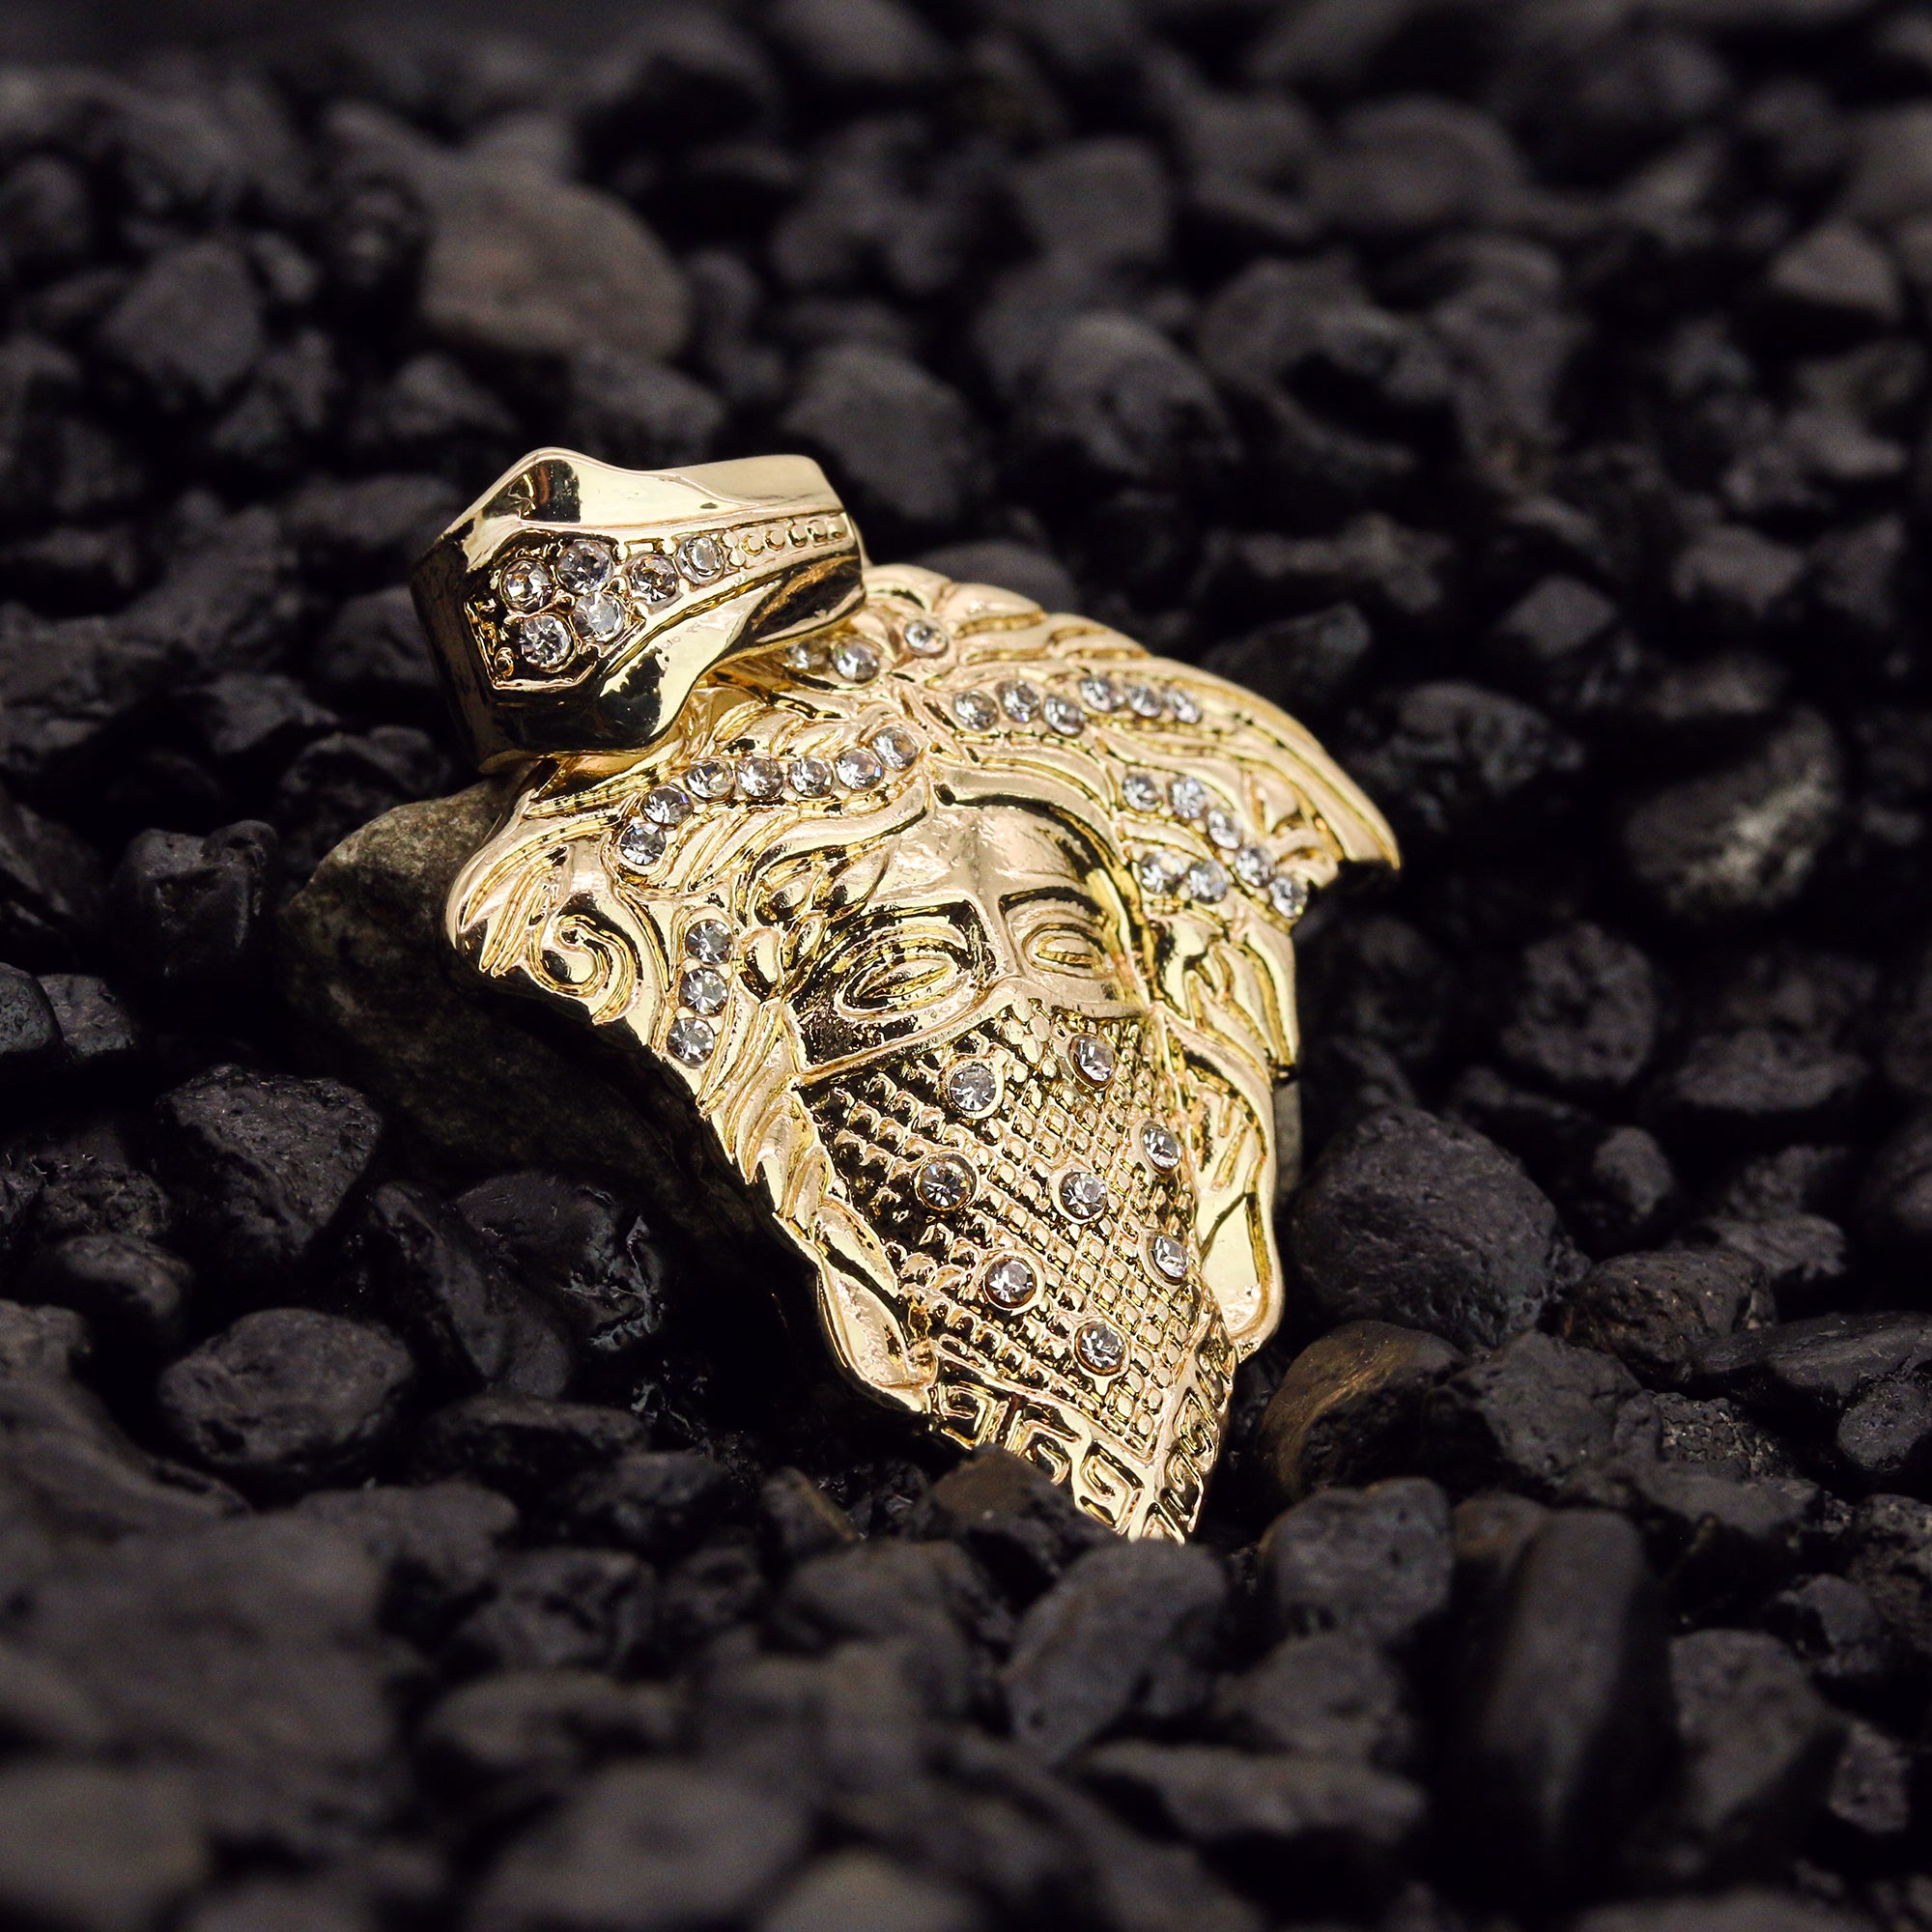 Thug Medusa Pendant 24" Rope Chain Men's 18k Gold Plated Jewelry